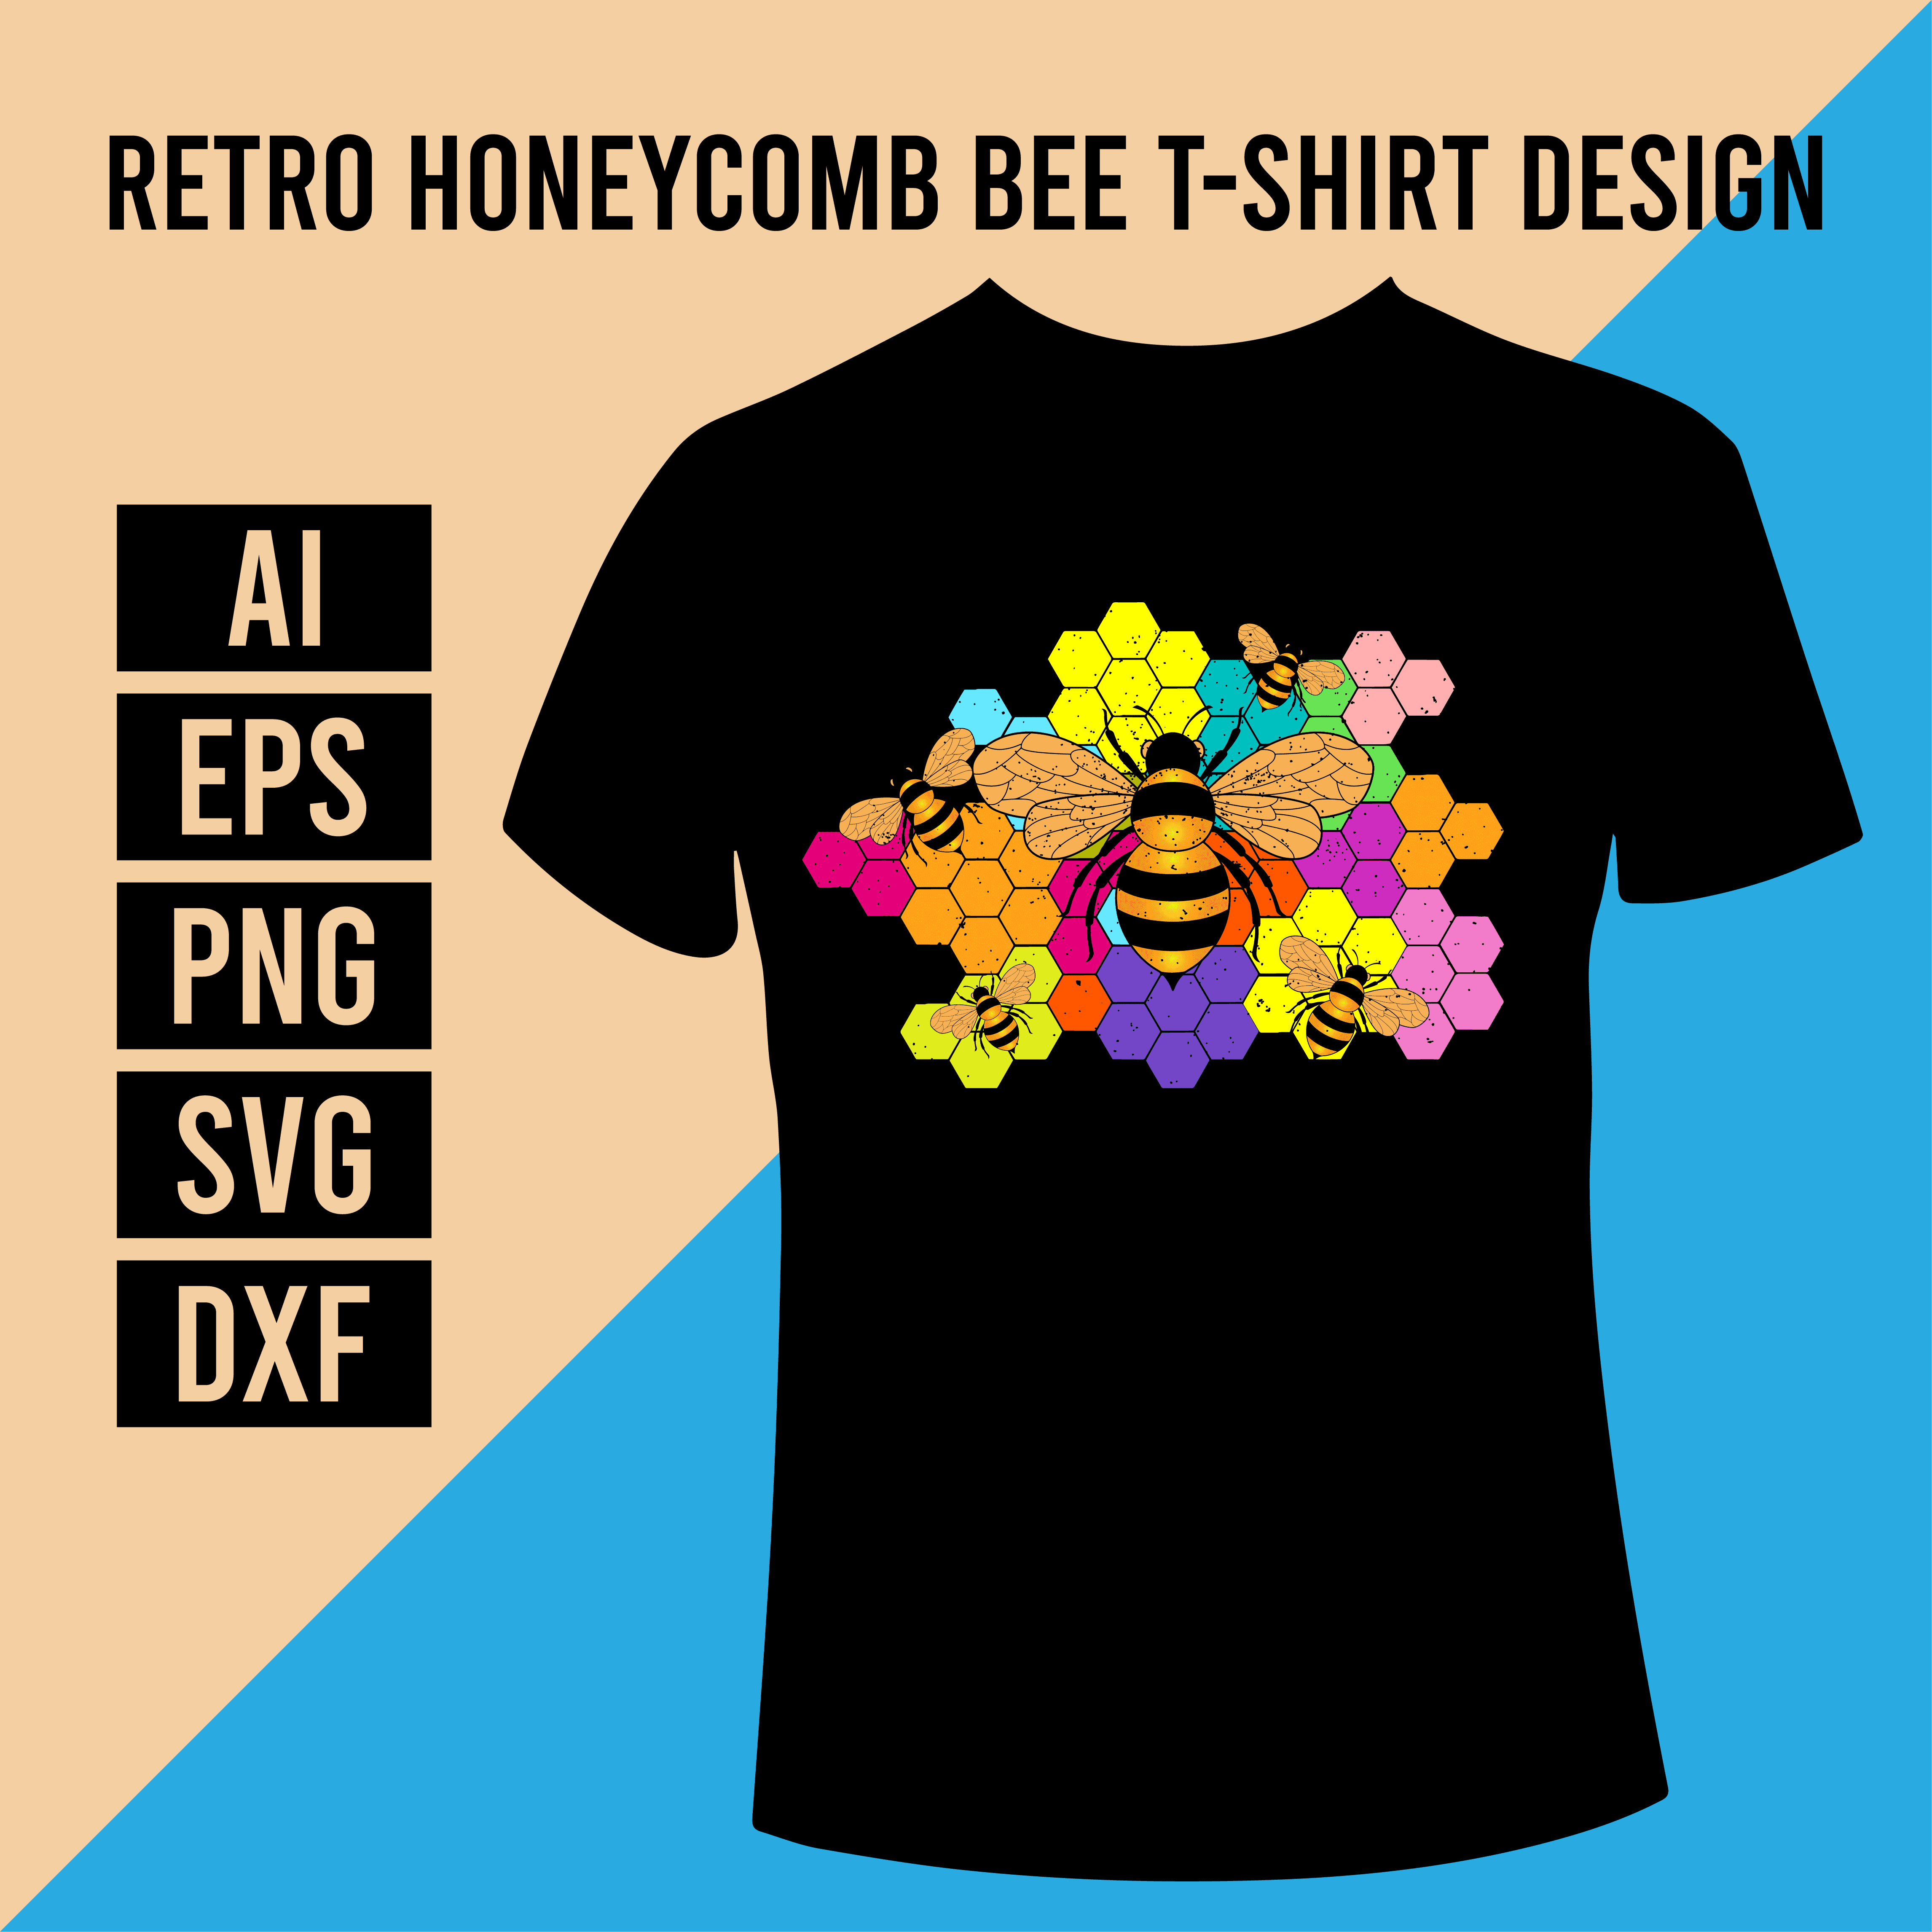 Retro Honeycomb Bee T- Shirt Design main cover.